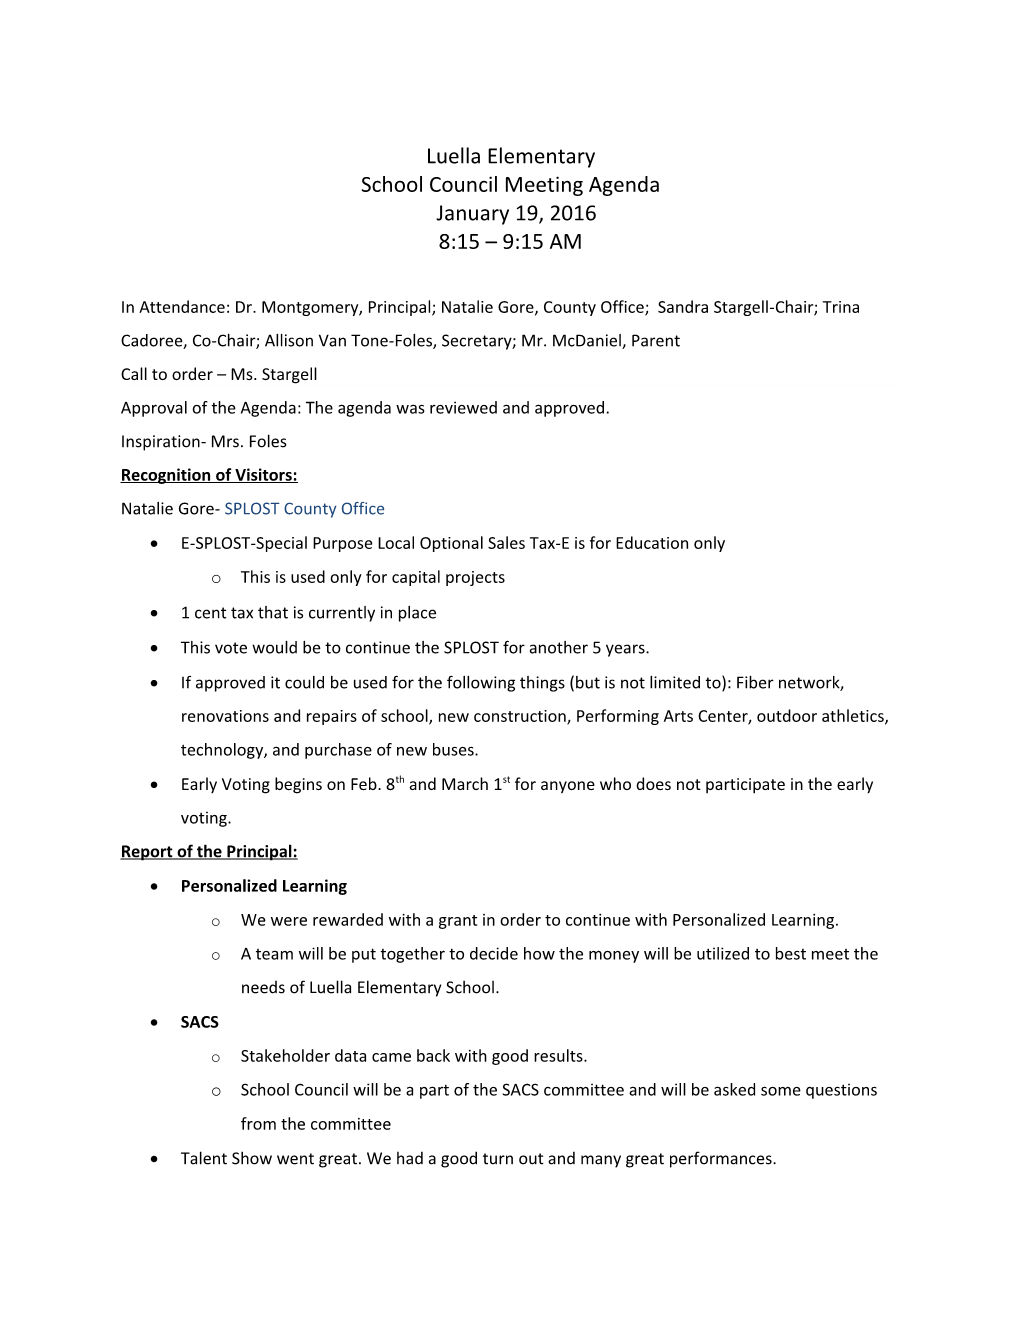 School Council Meeting Agenda s1